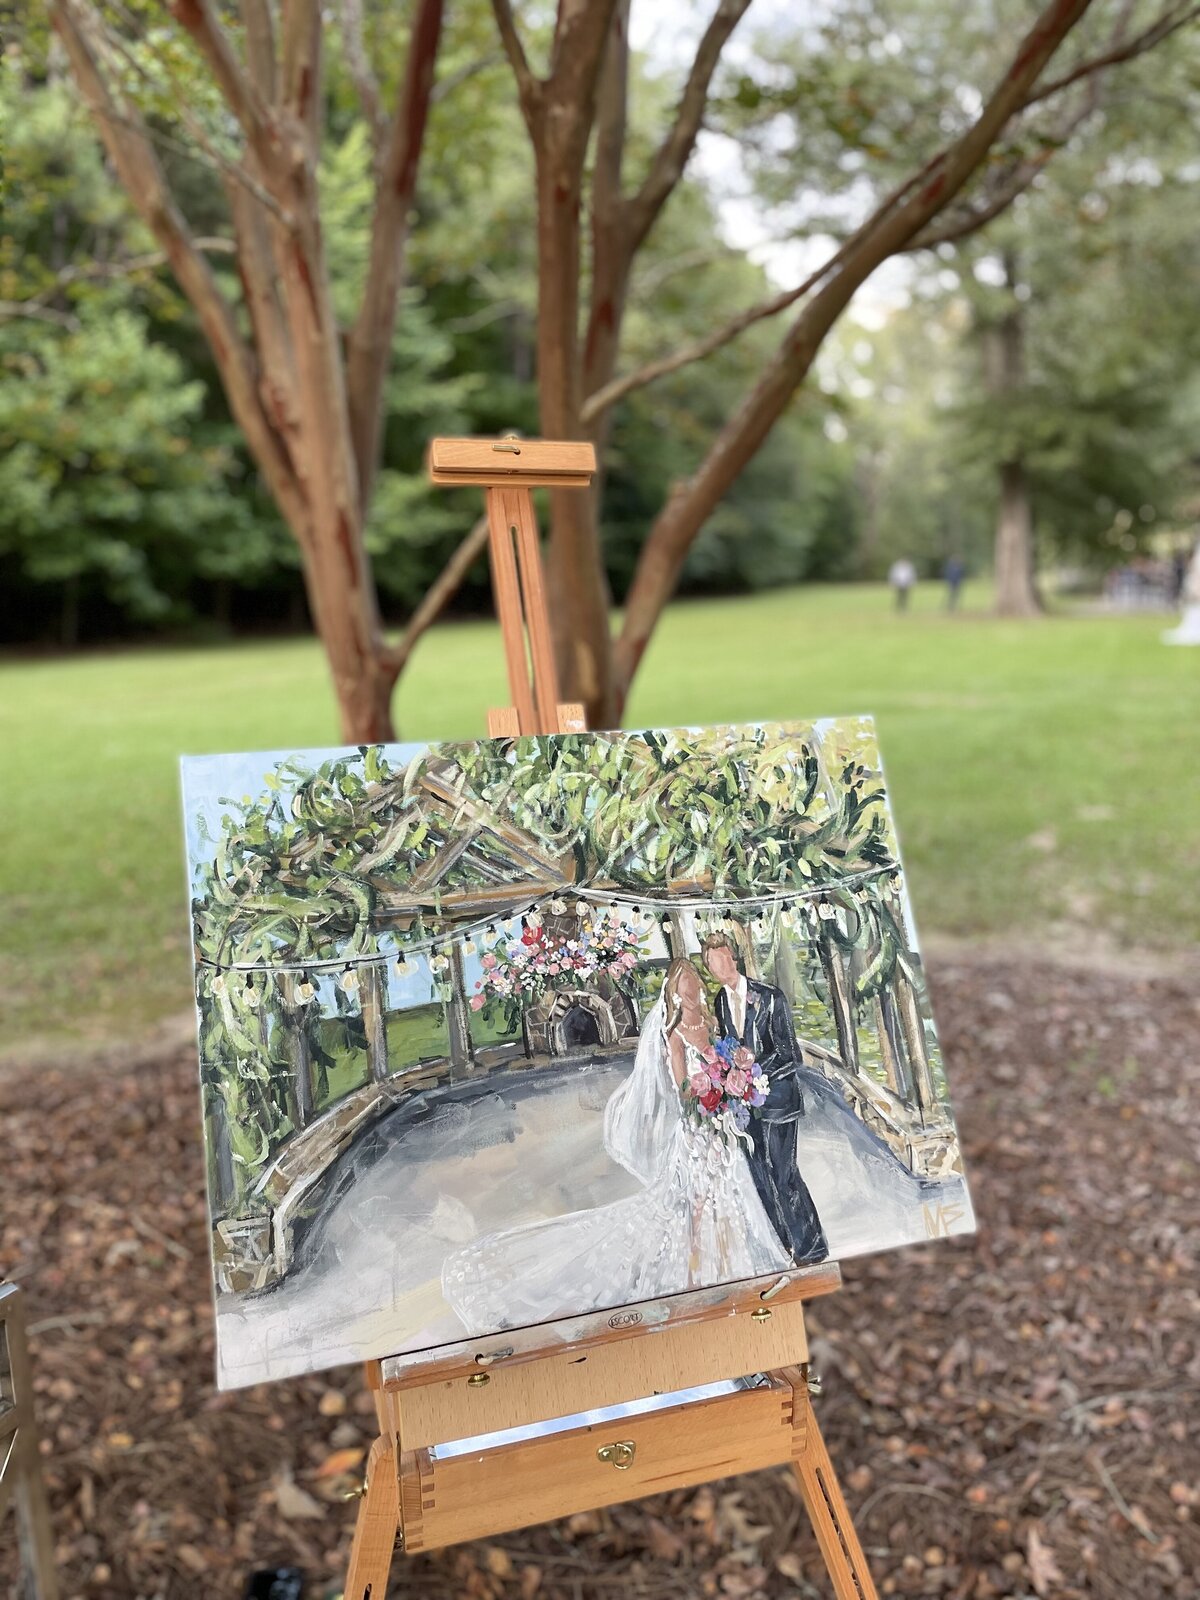 Miriam Shufelt Art live wedding painting, Mississippi